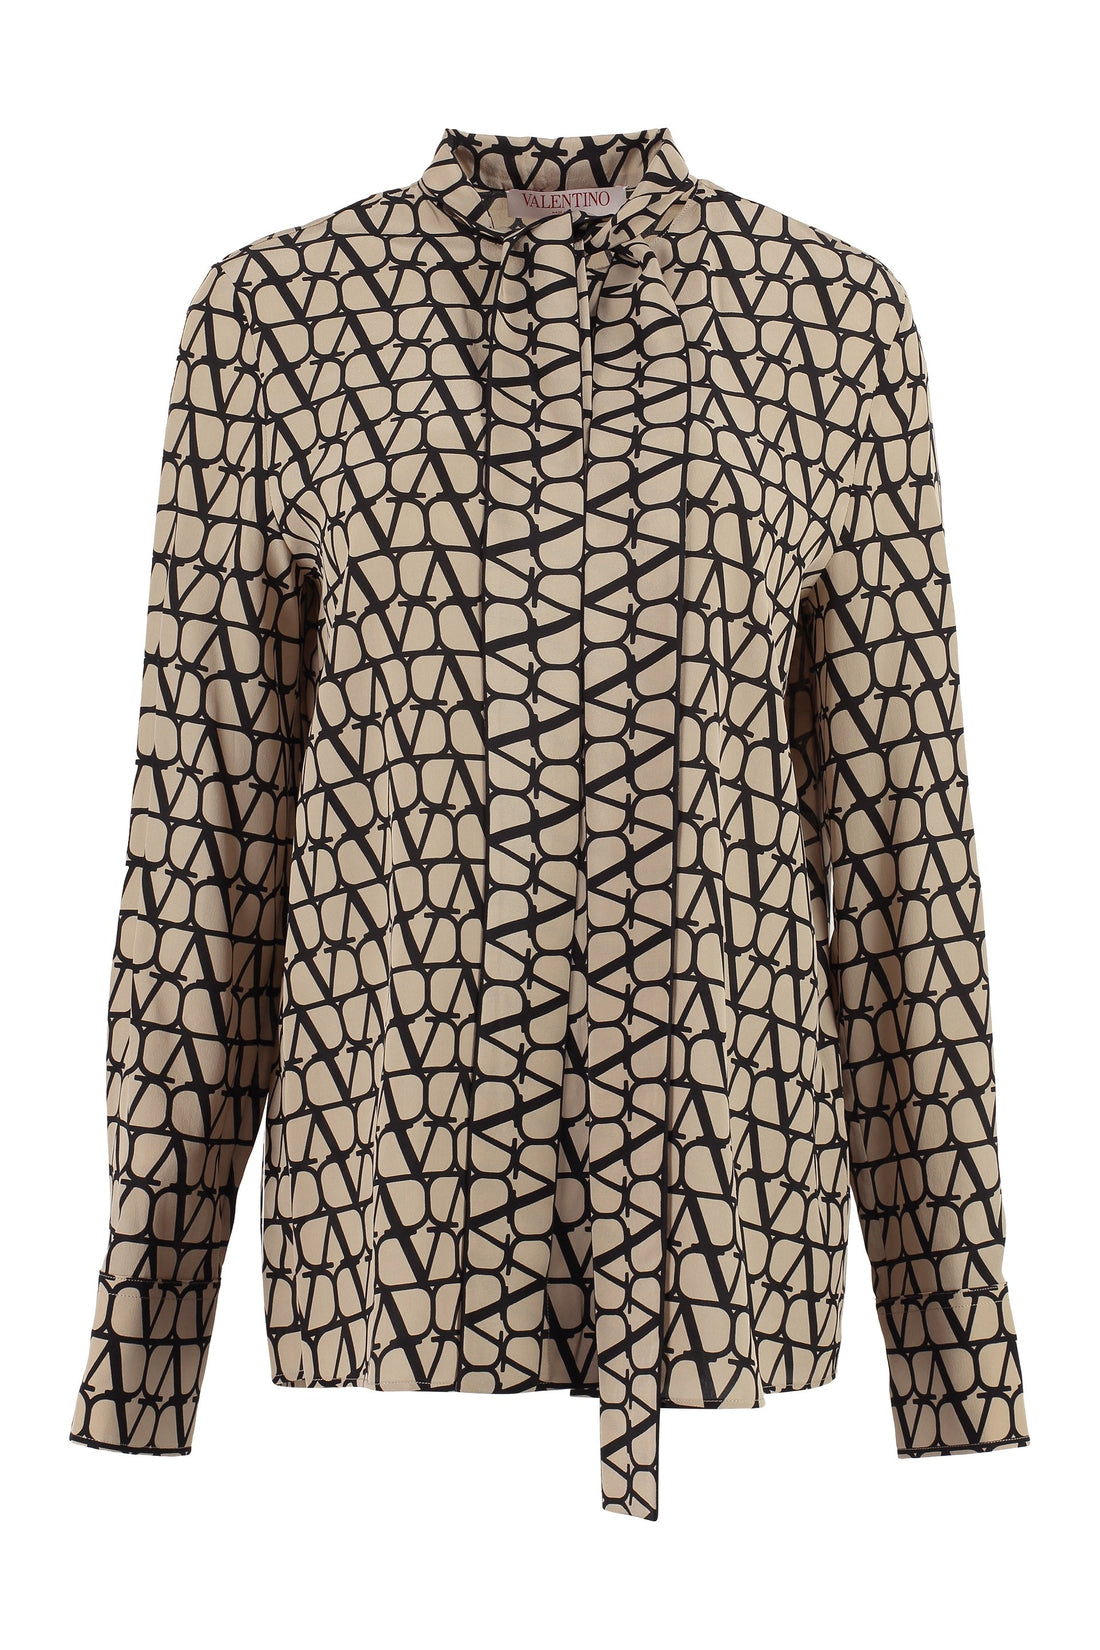 Valentino-OUTLET-SALE-Printed silk shirt-ARCHIVIST